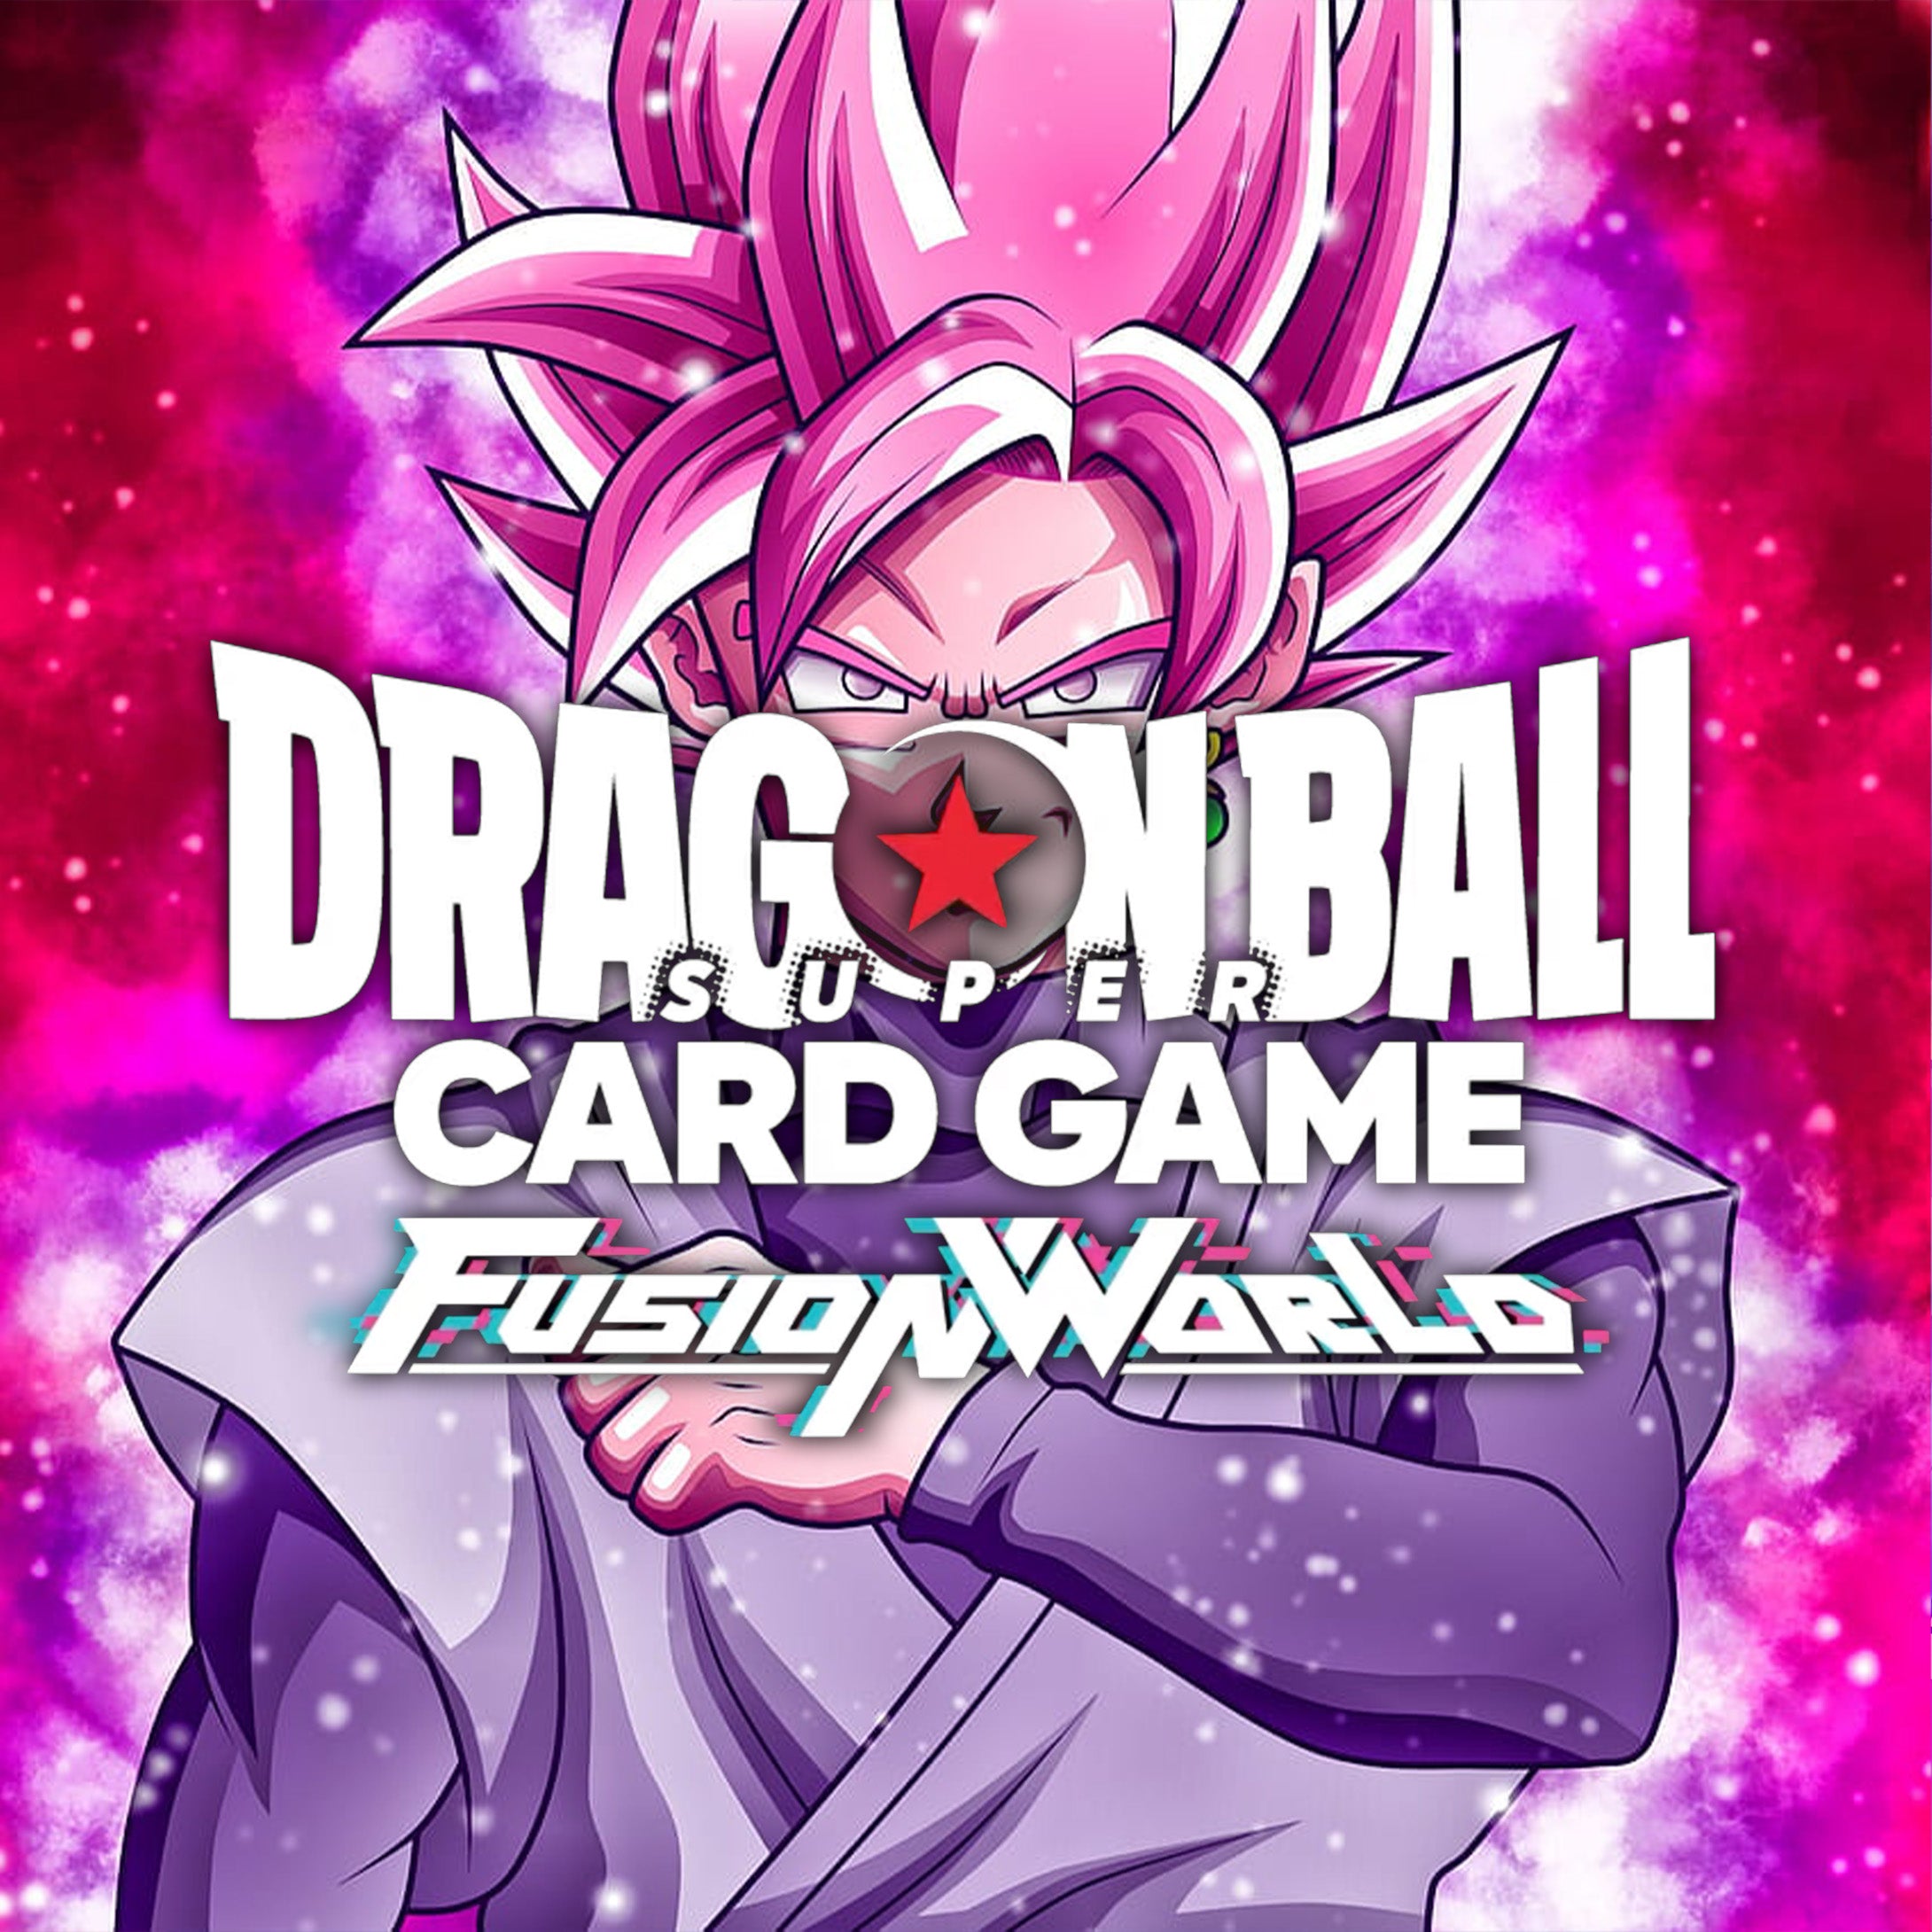 Dragon Ball Super Card Game Fusion World Booster Packs